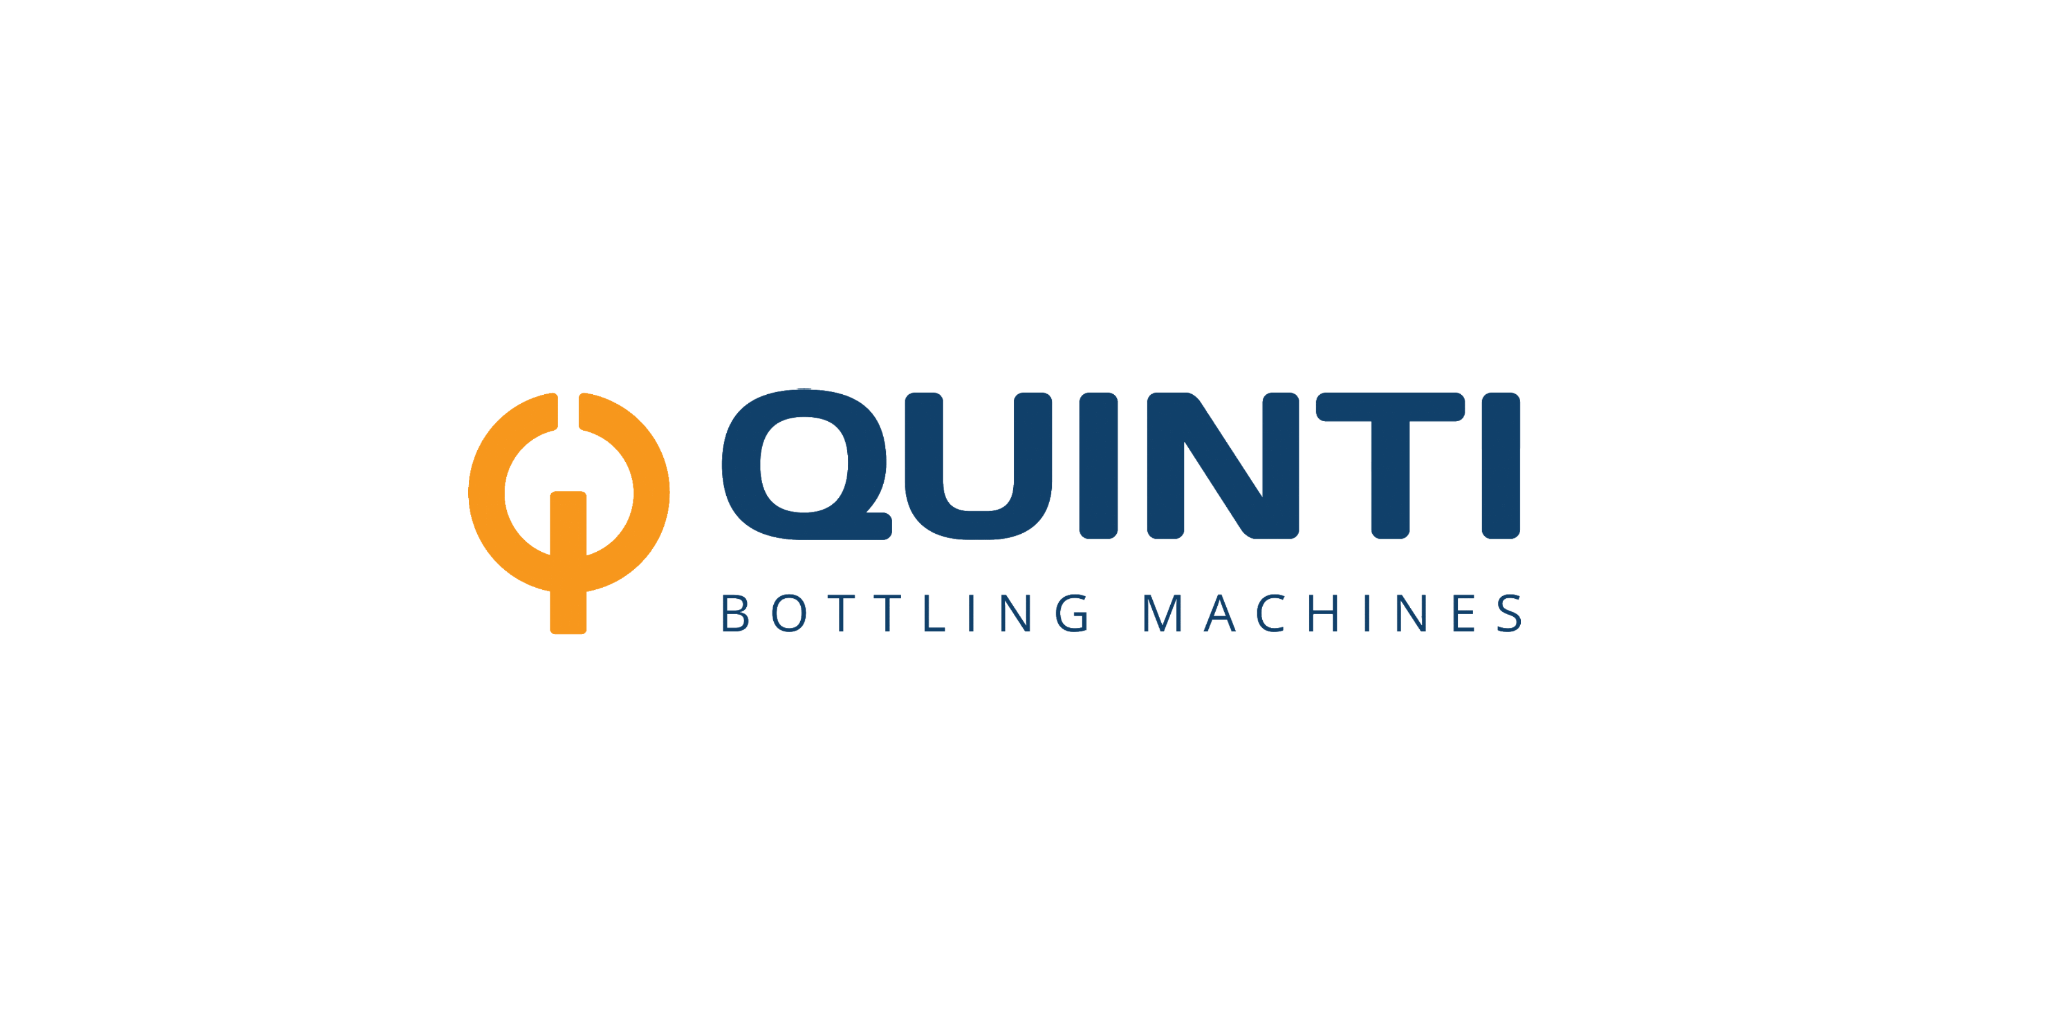 Quinti Bottilig Machines logo